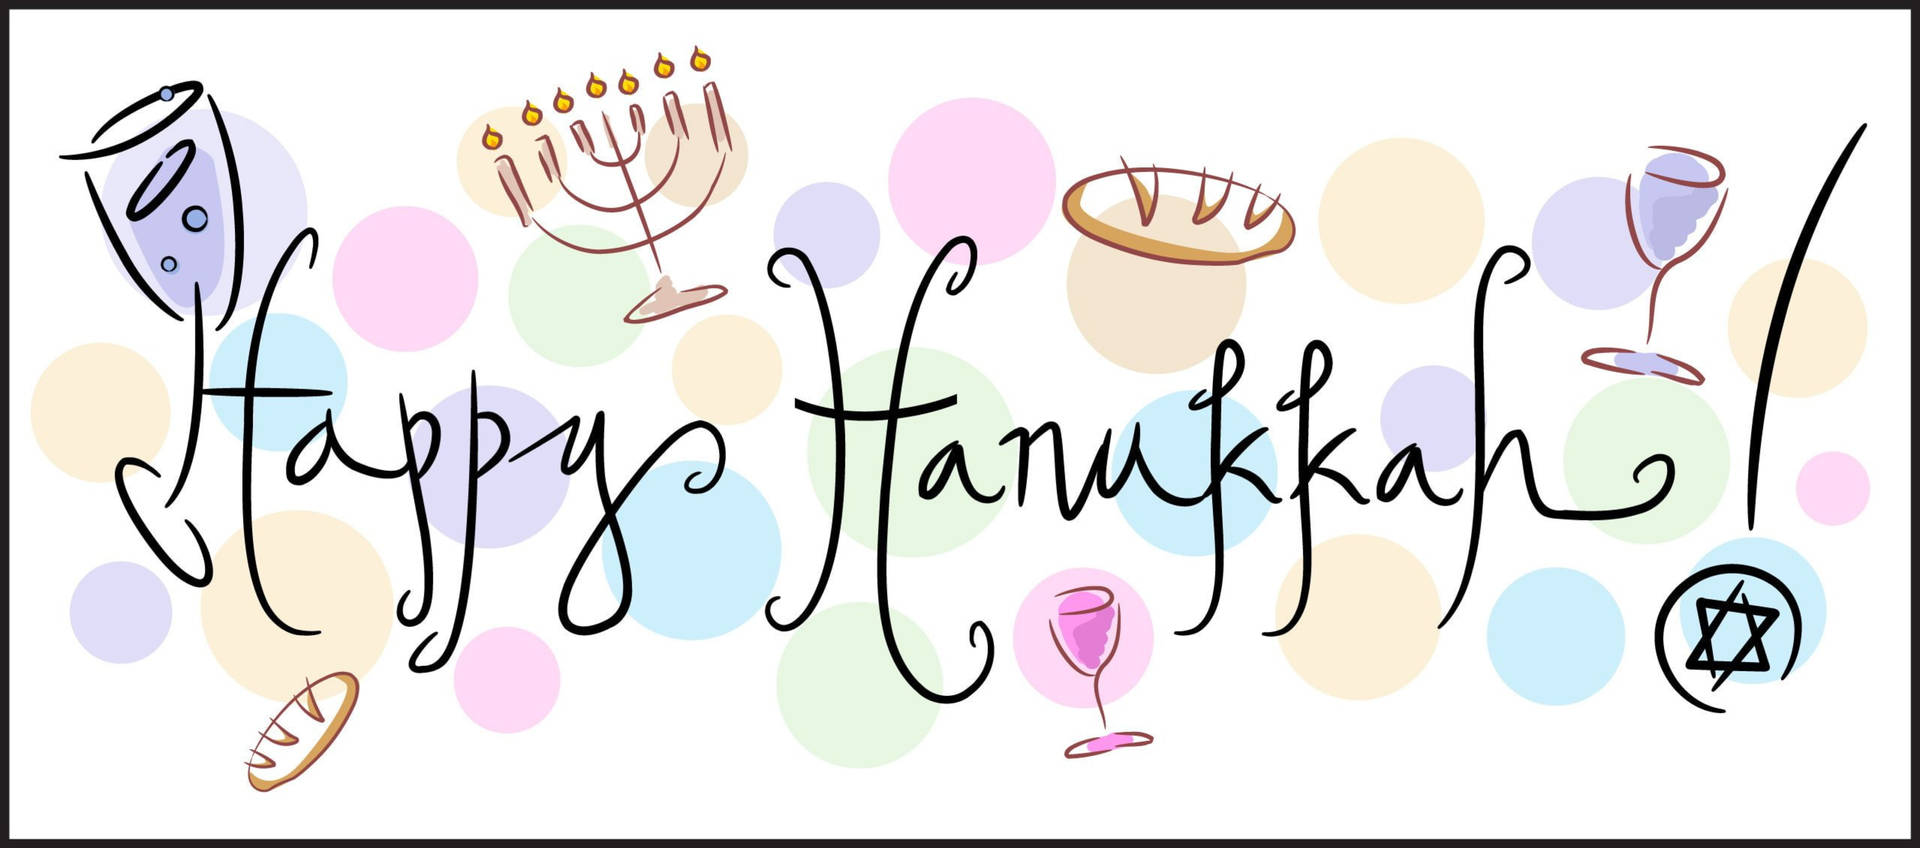 Joyful Hanukkah Celebration with Exquisite Aesthetic Wallpaper